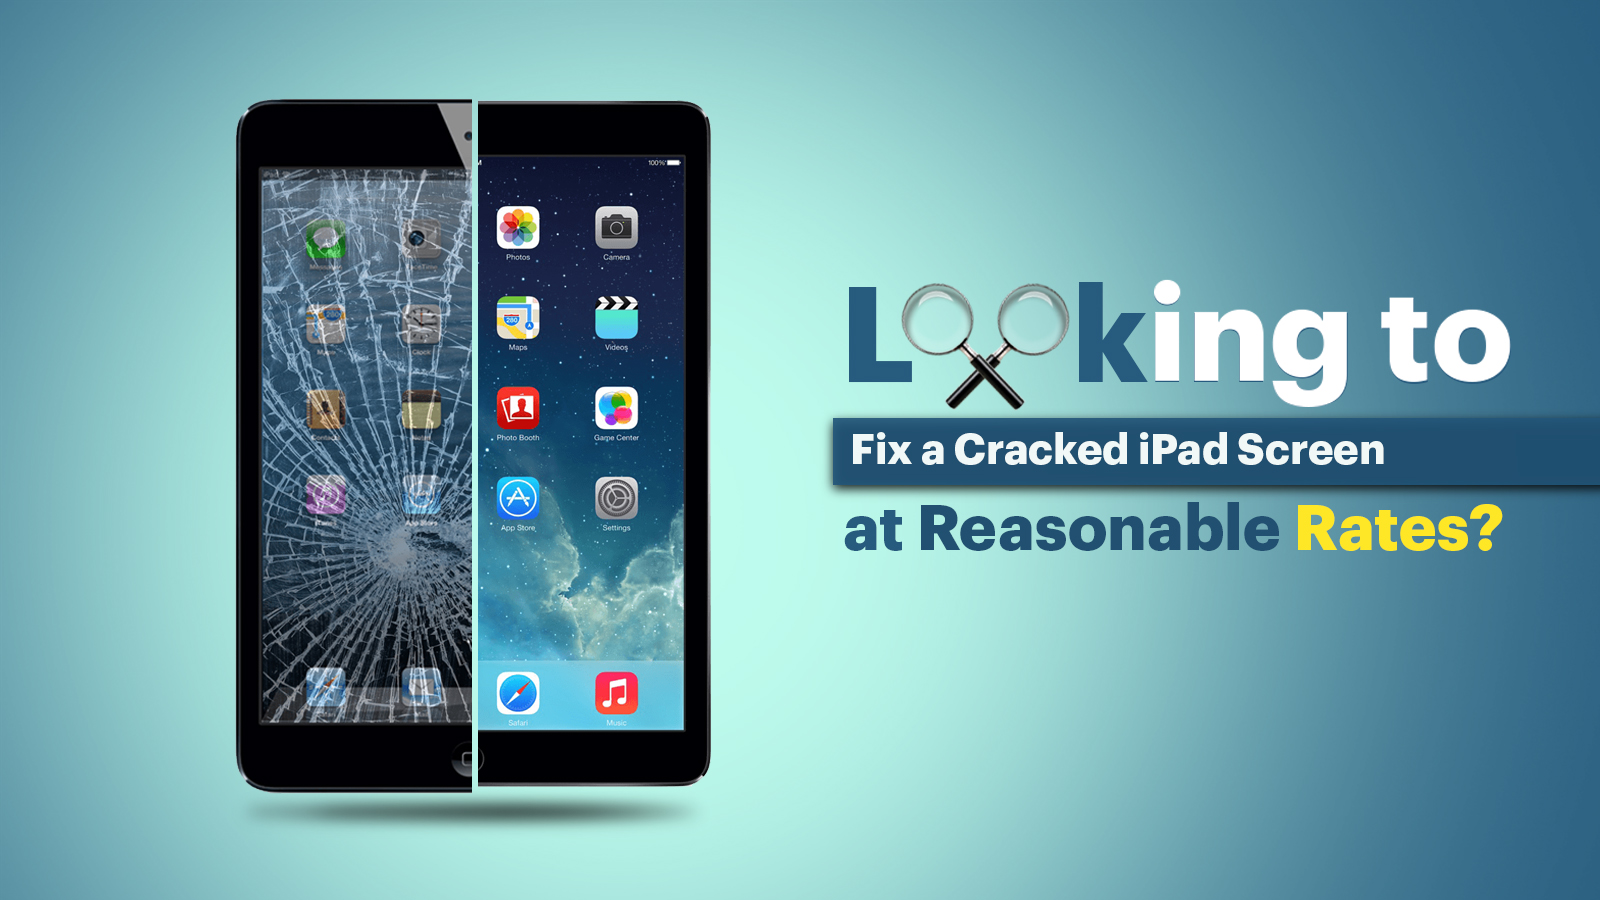 fix the cracked iPad screen